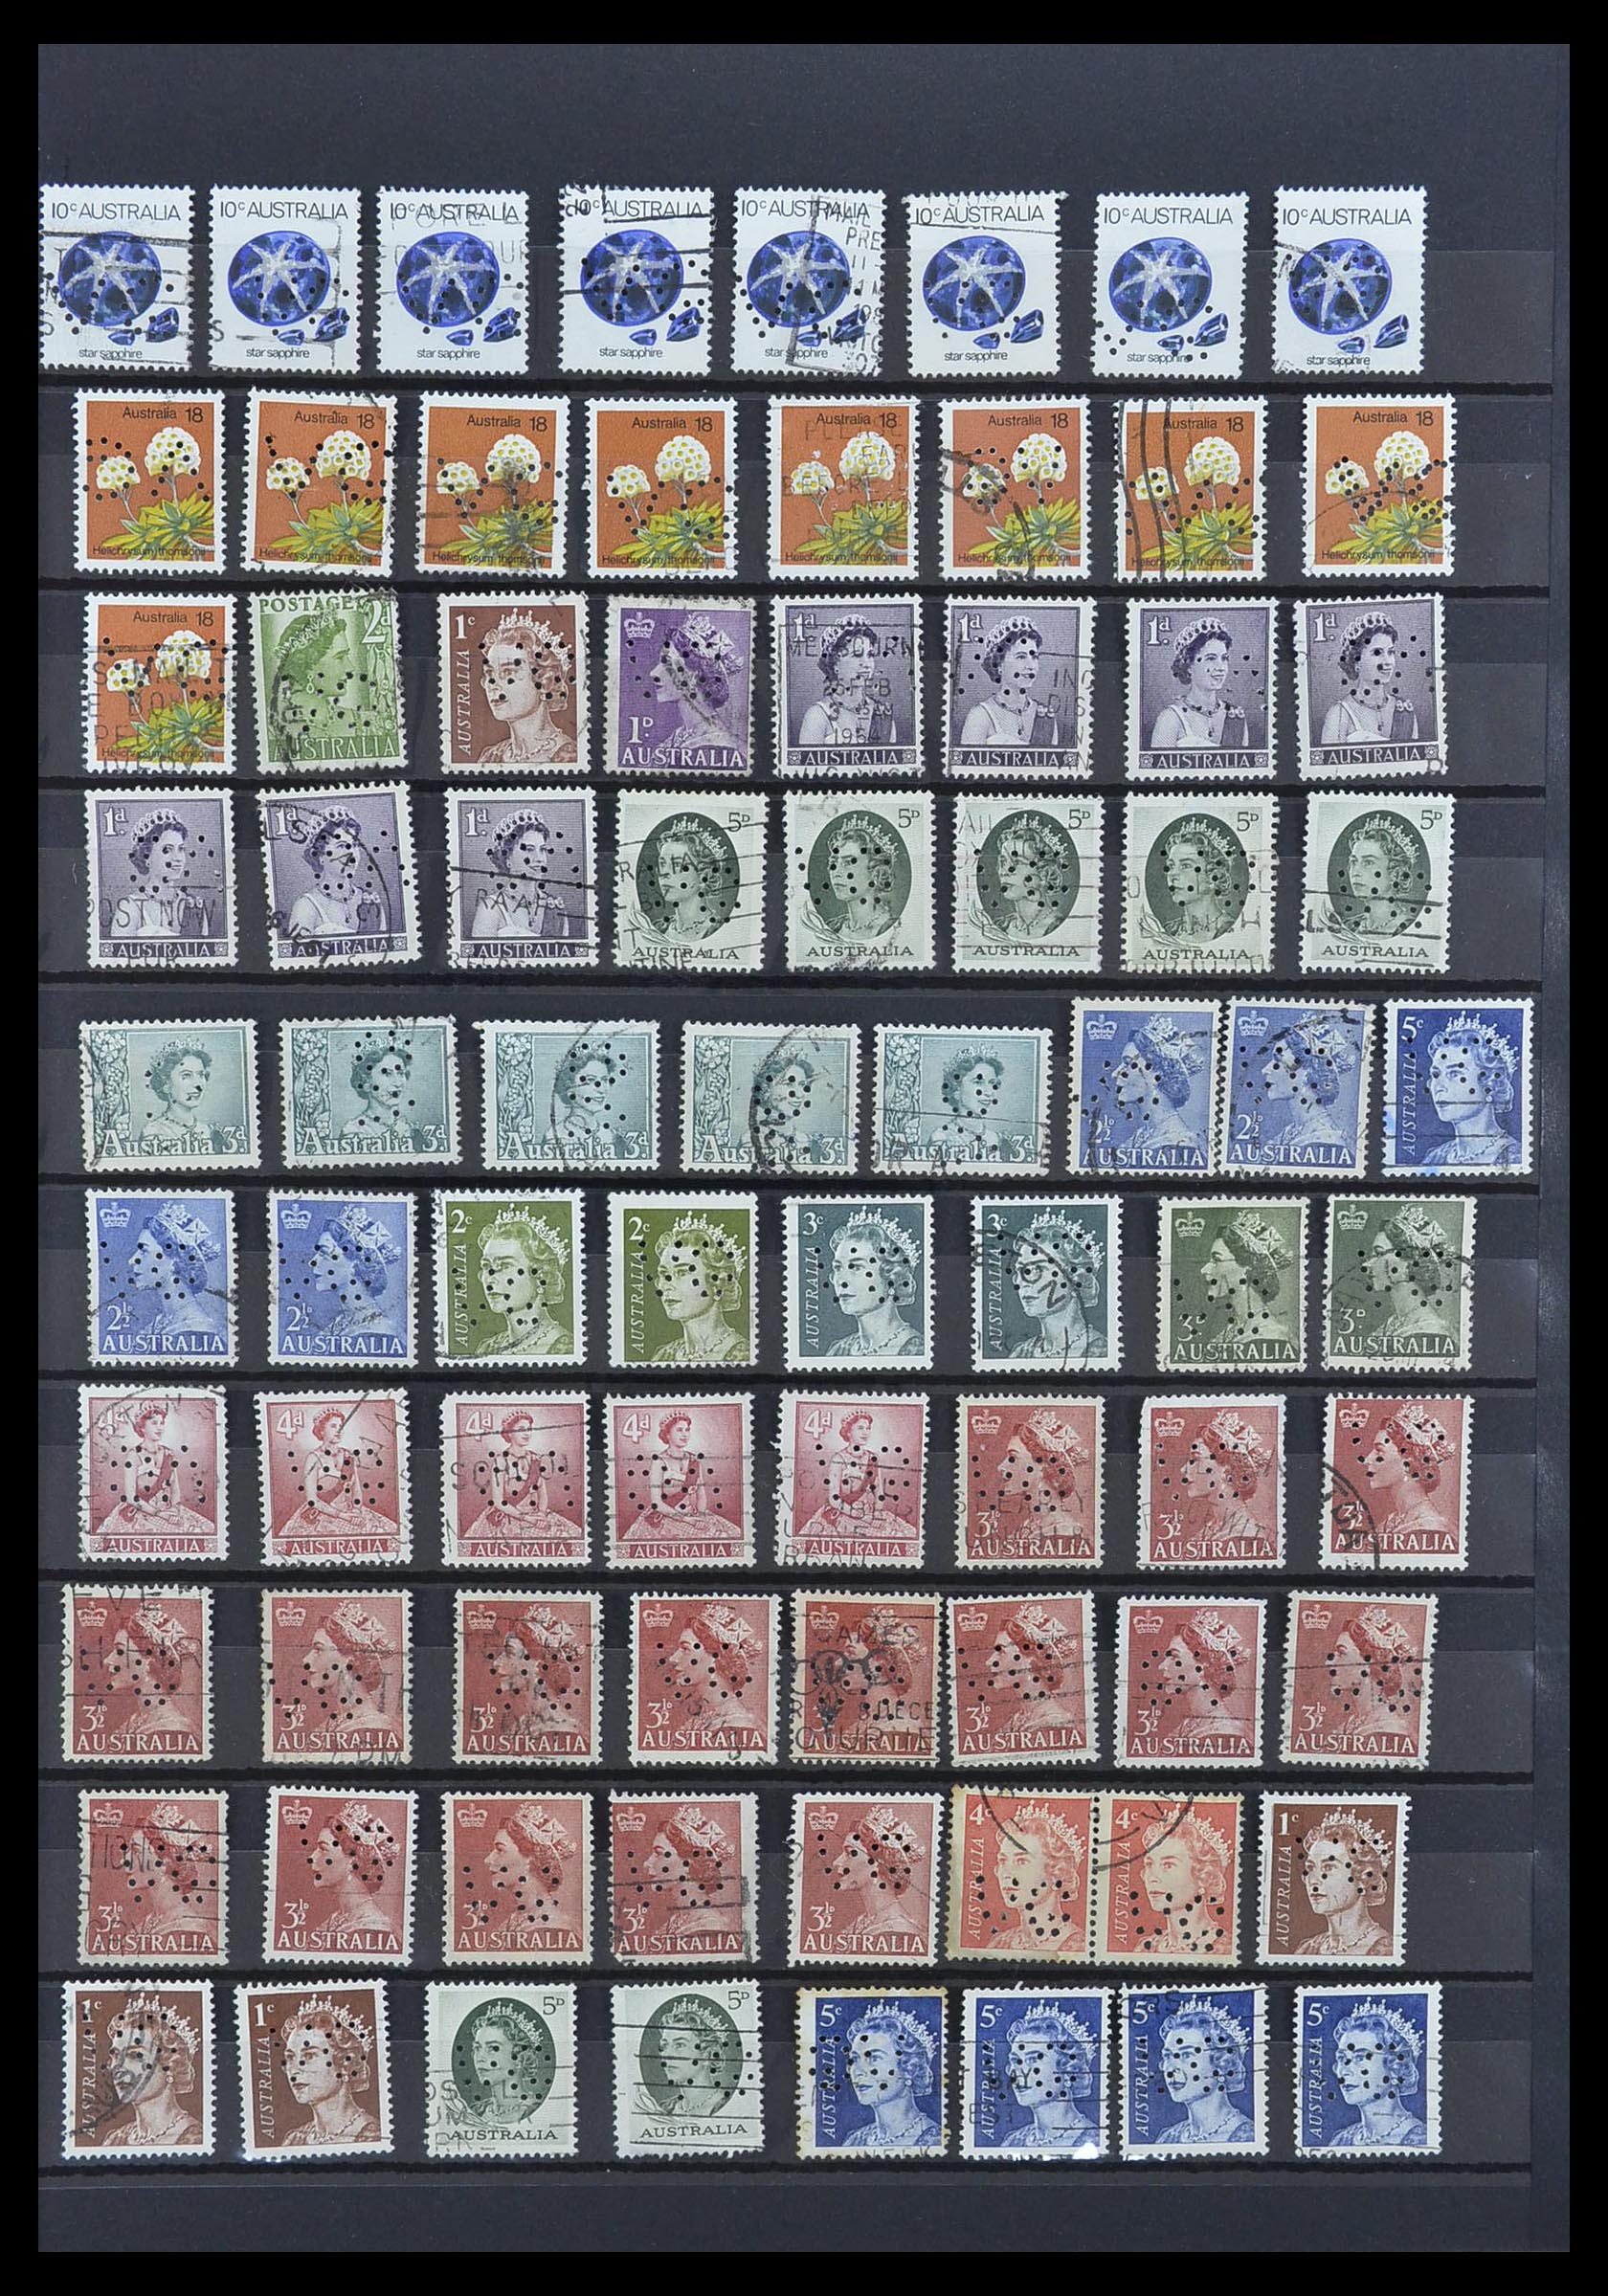 33510 003 - Stamp collection 33510 Australia perfins 1900-1970.